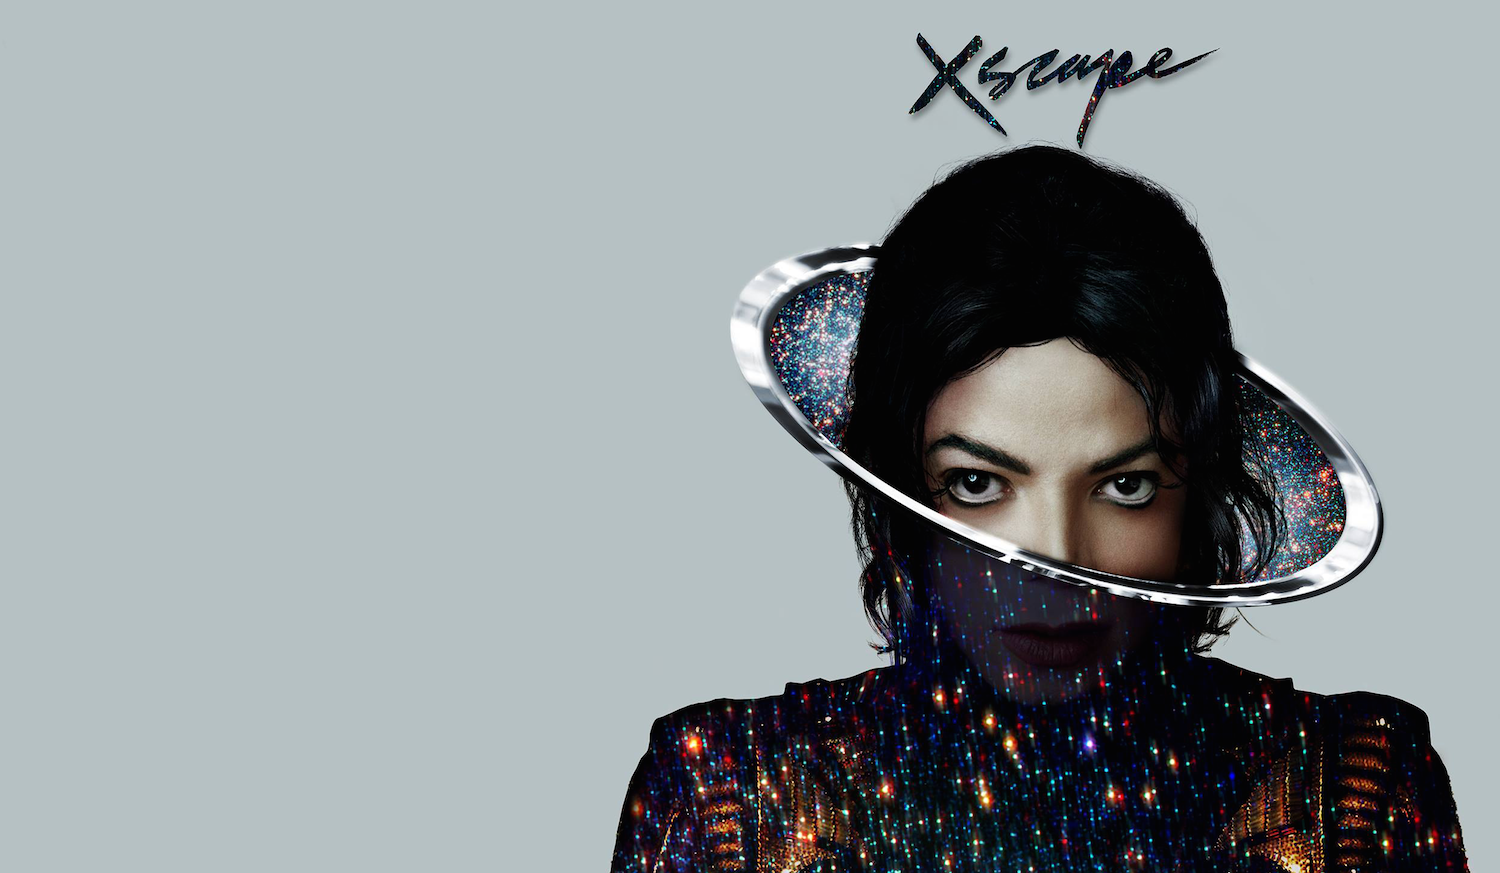 Does XSCAPE, New Michael Jackson Album, Honor Or Monetize His Legacy?